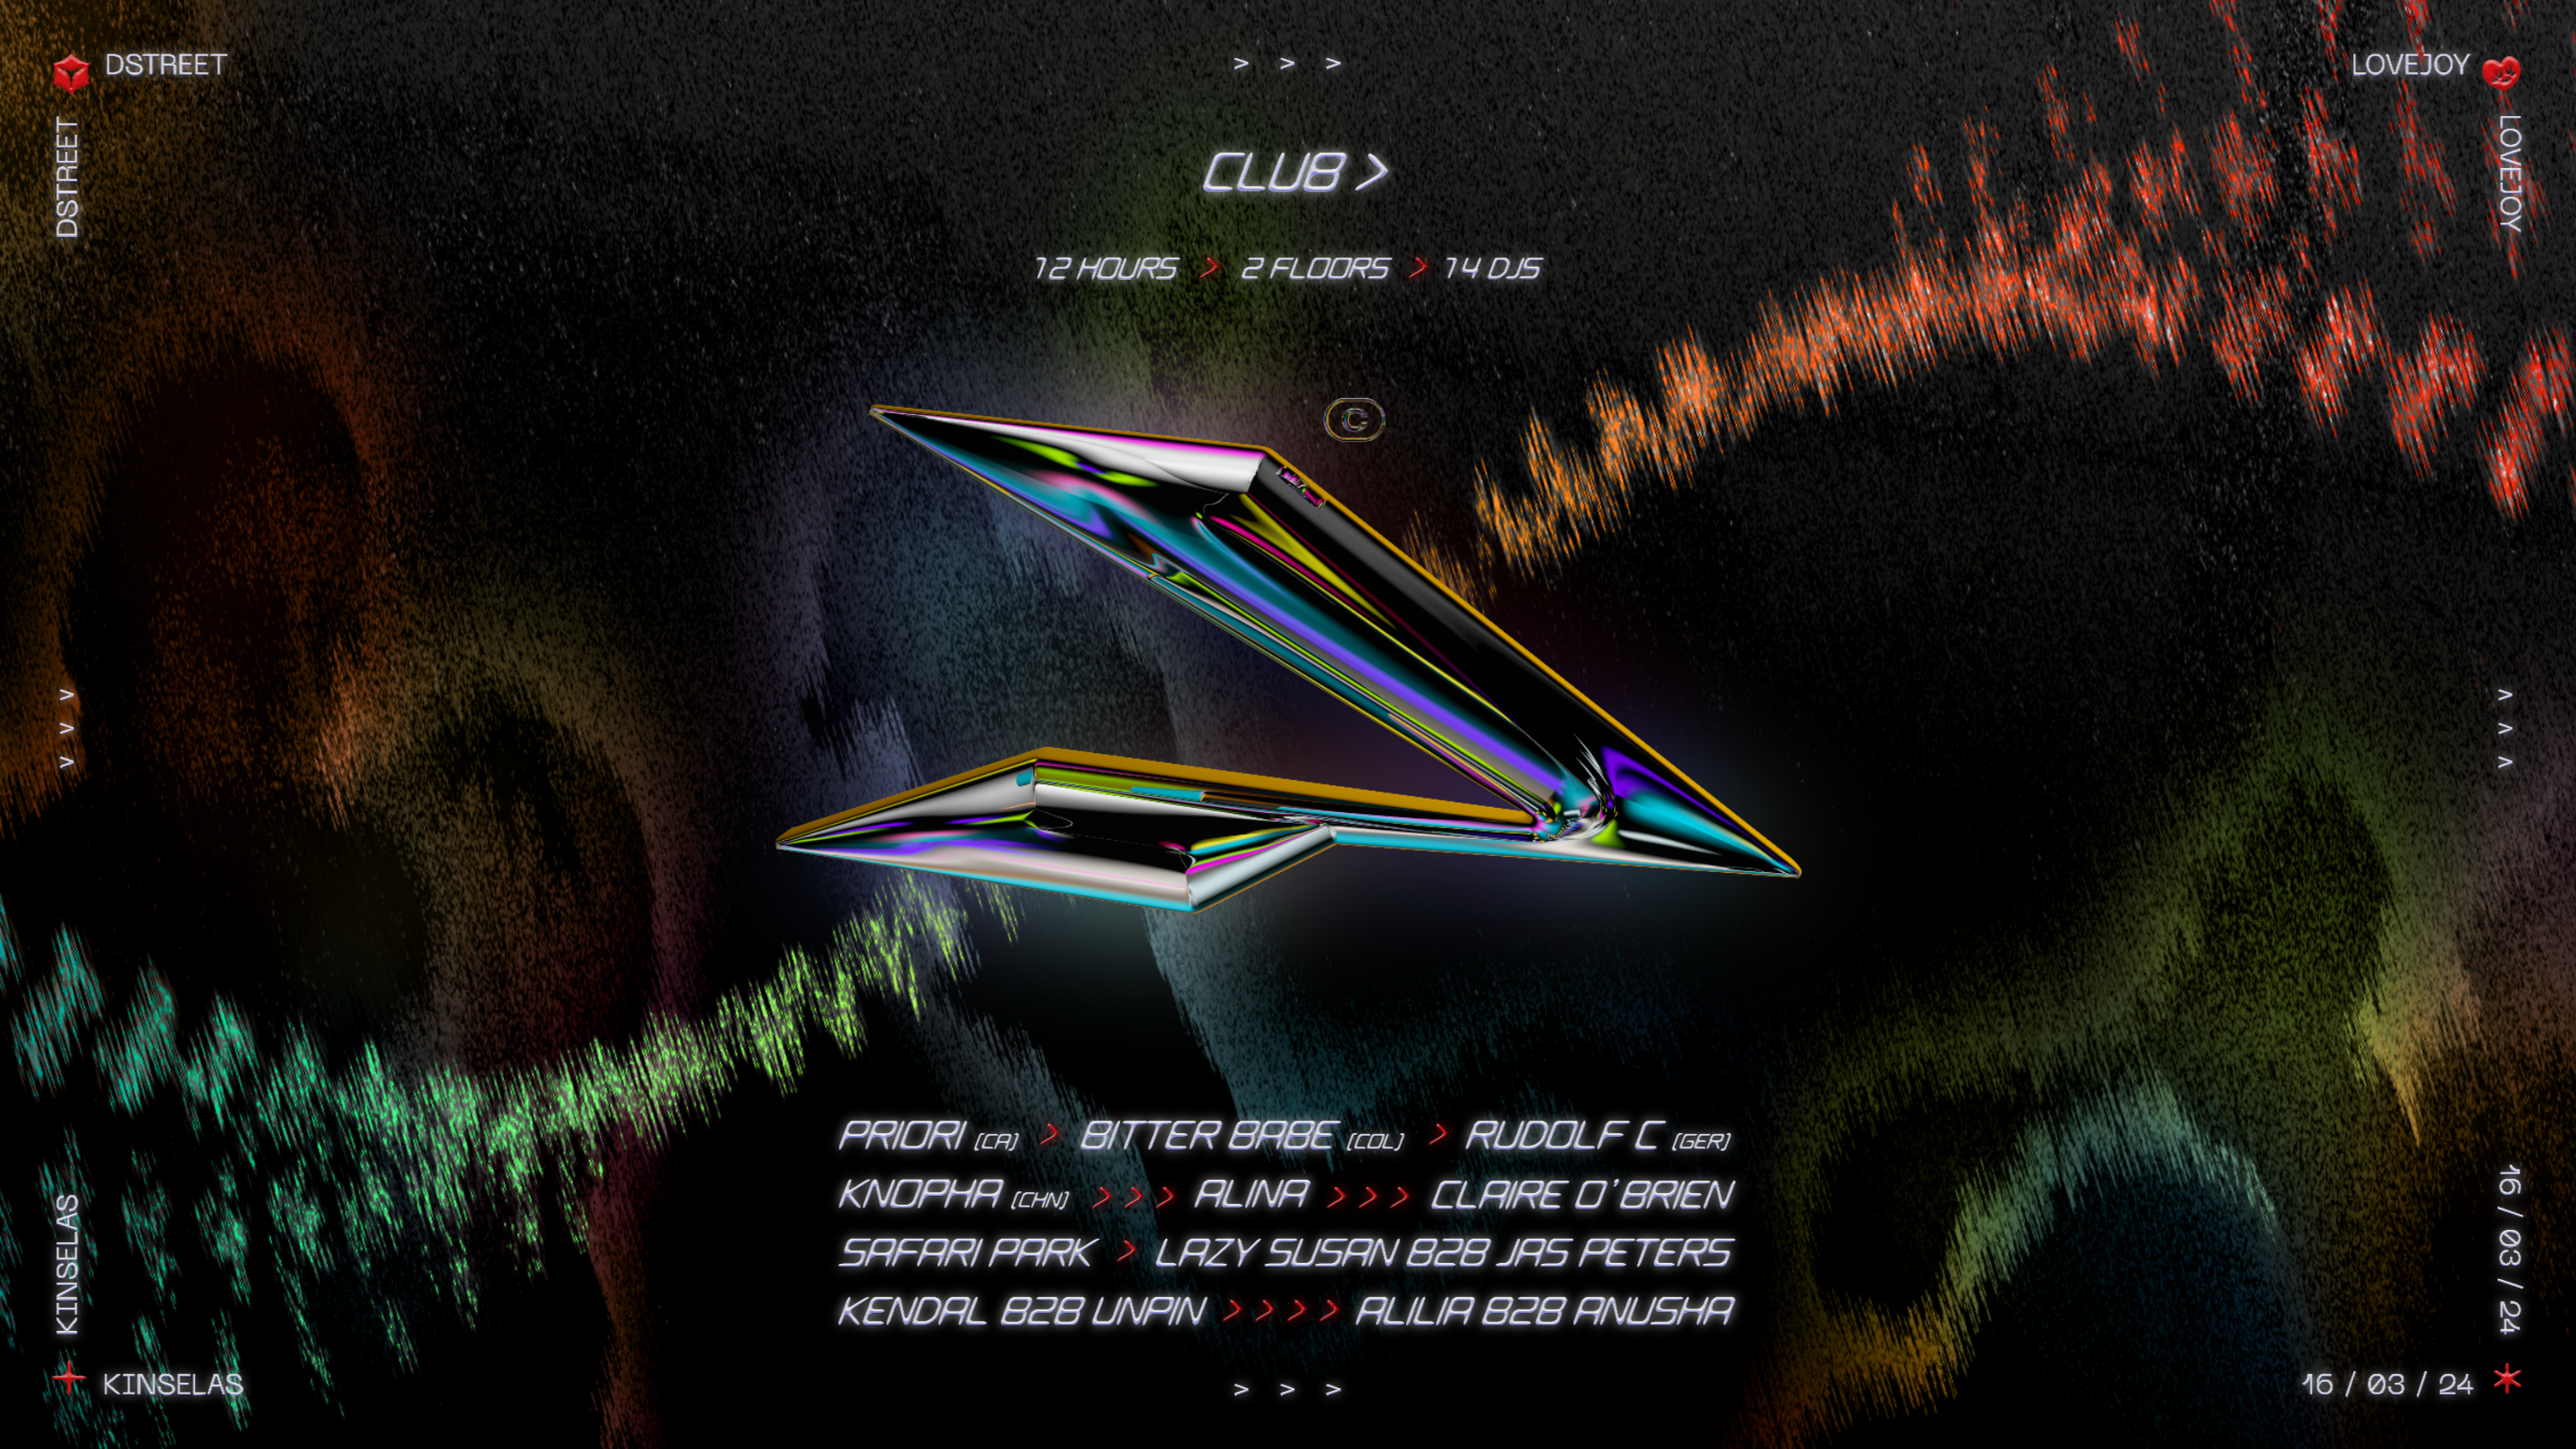 Club MORE > - フライヤー表